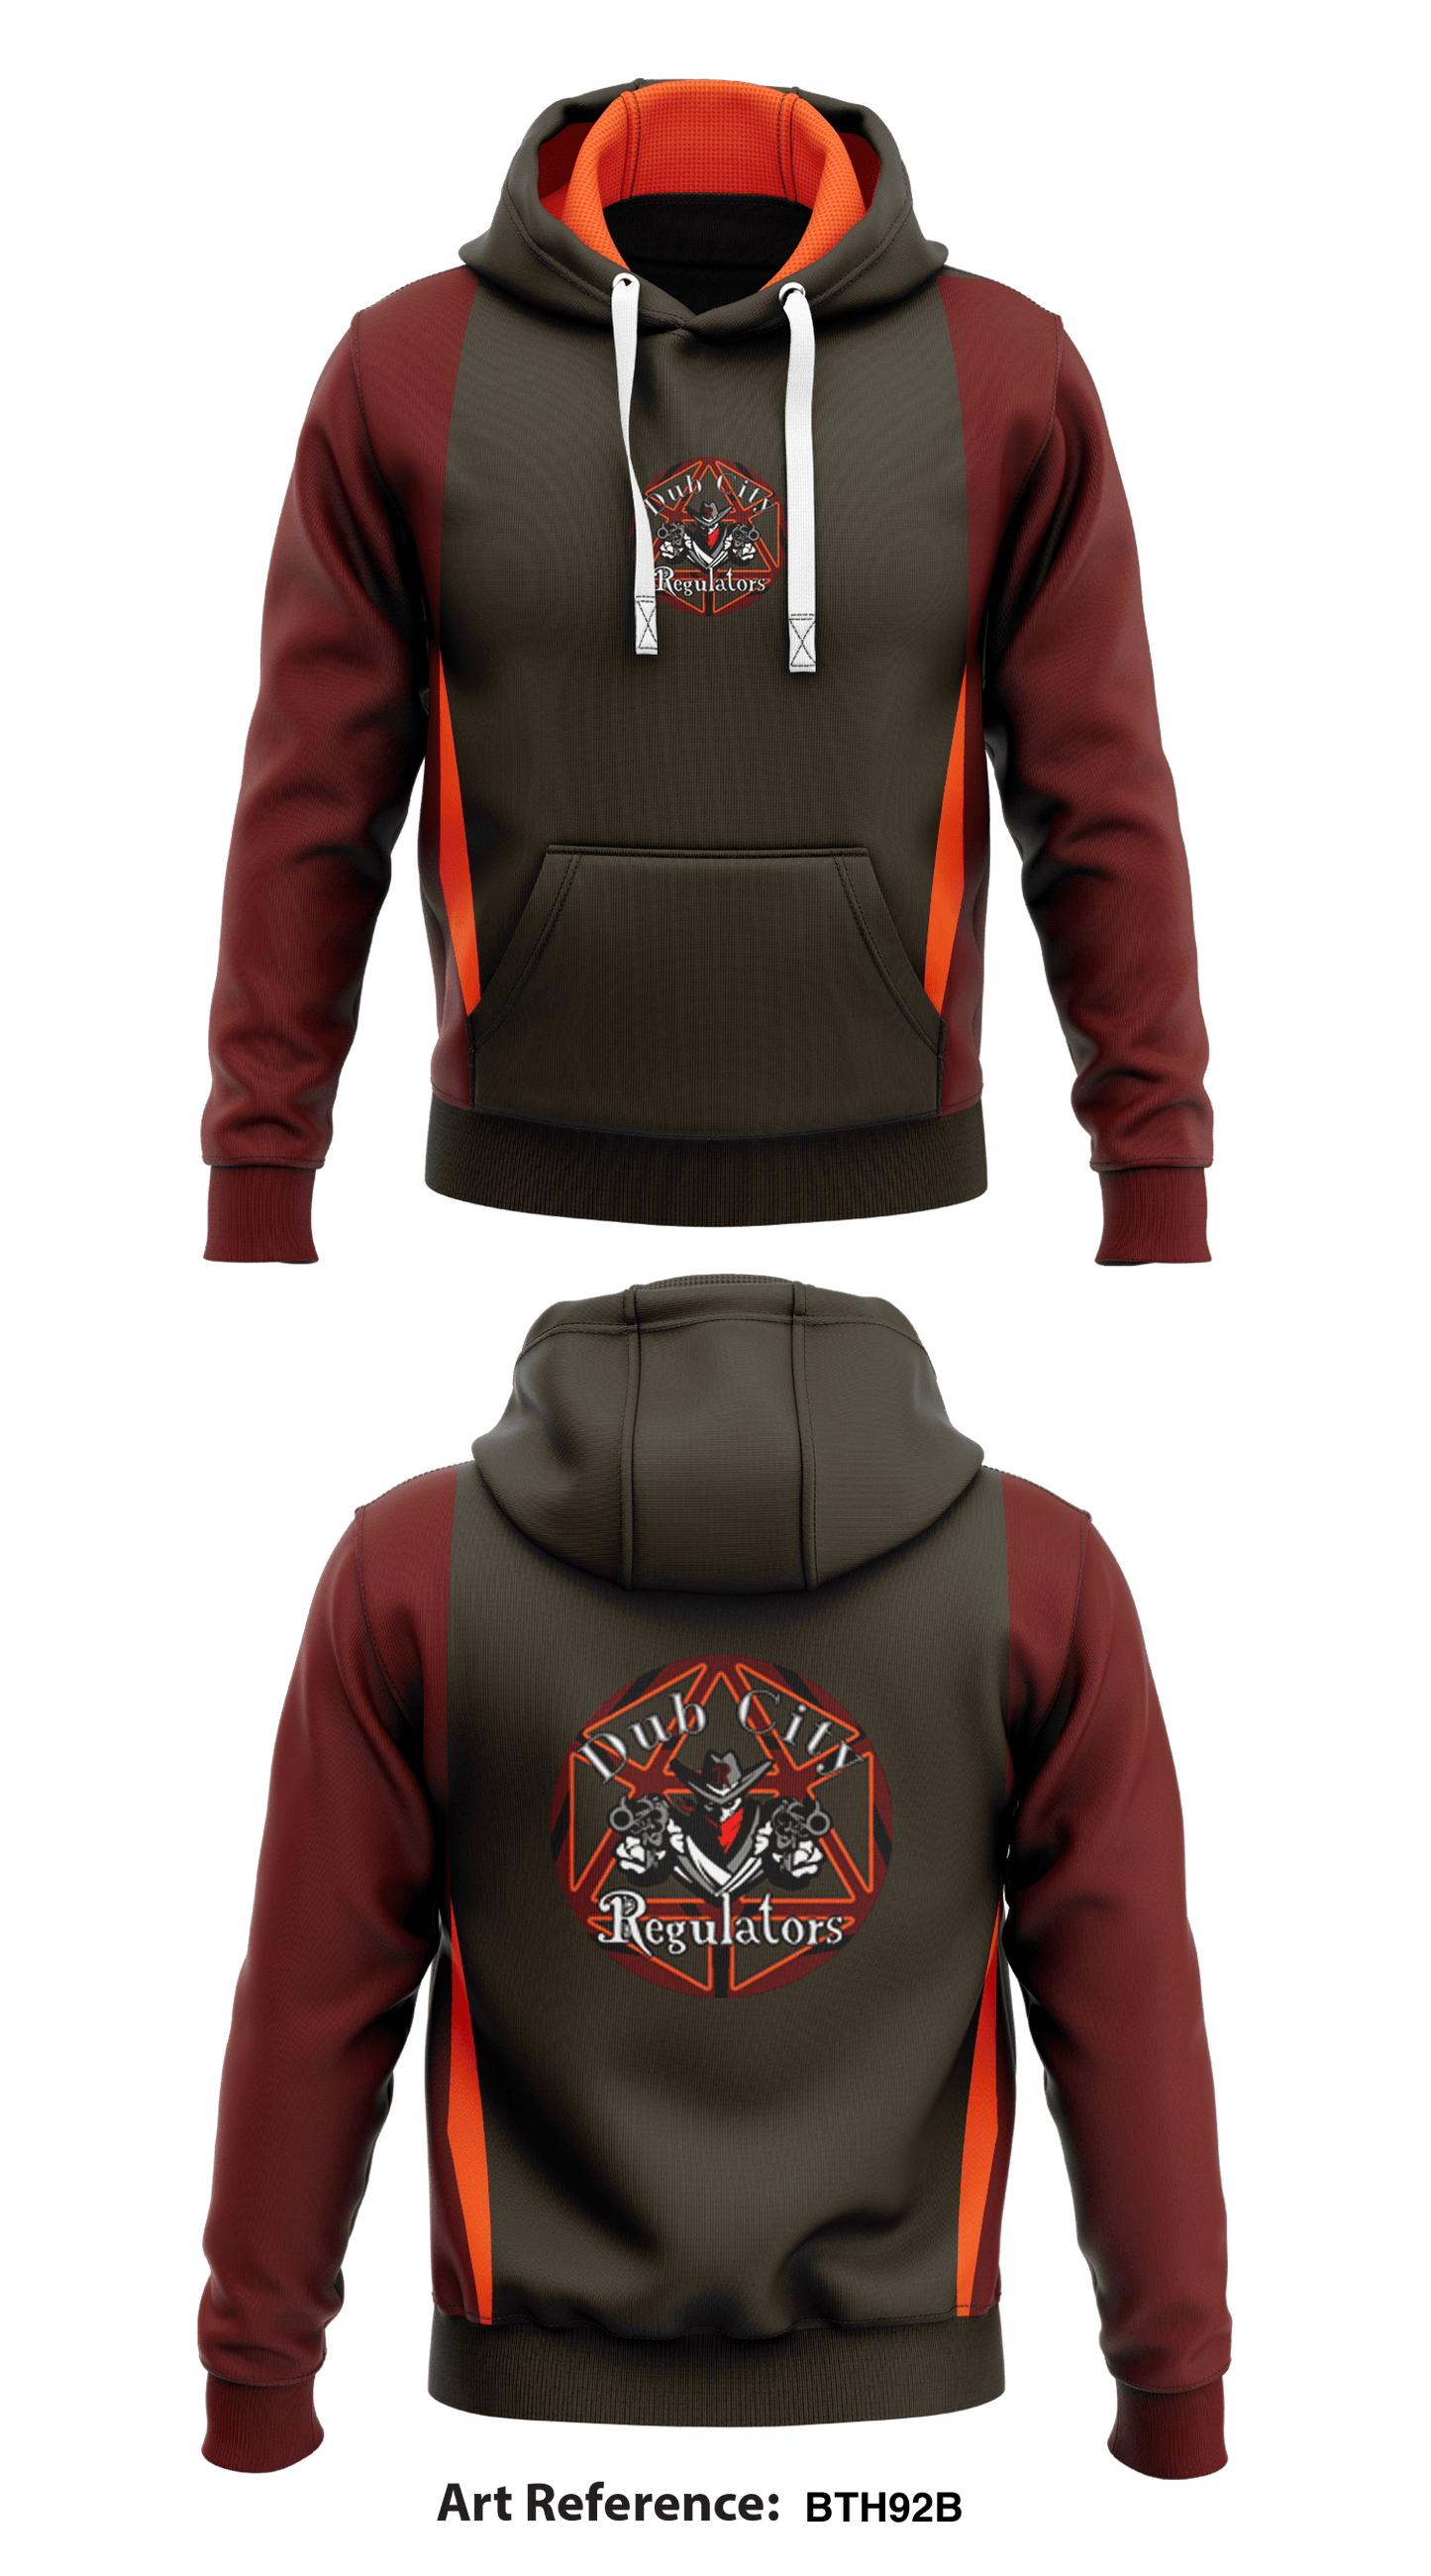 Dub City Regulators Store 1  Core Men's Hooded Performance Sweatshirt - btH92b